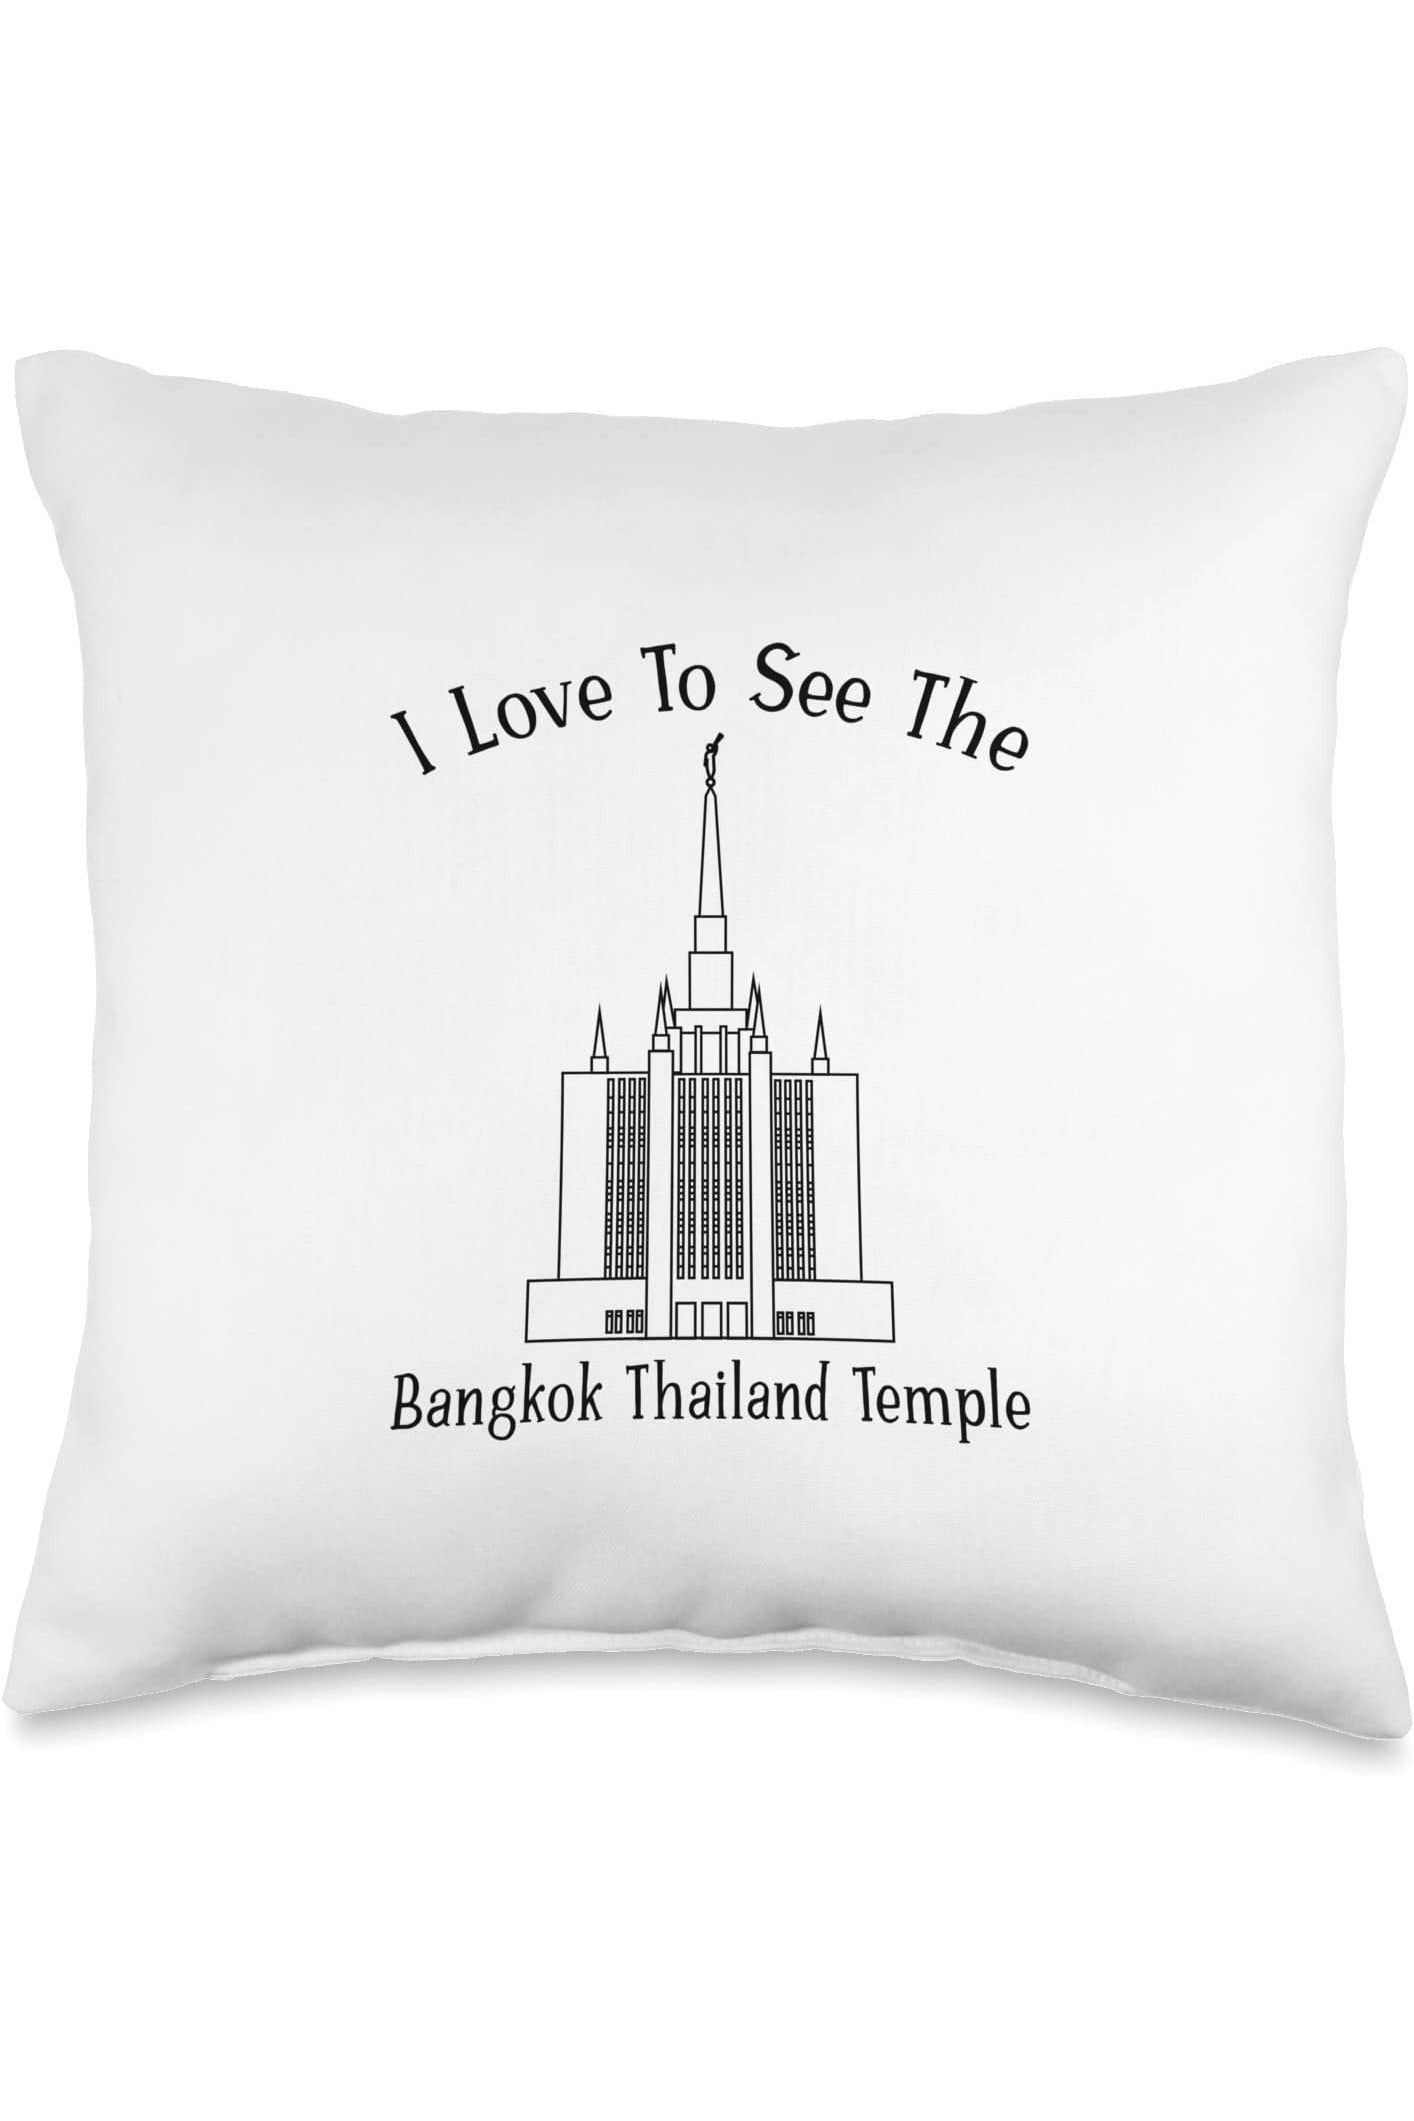 Bangkok Thailand Temple Throw Pillows - Happy Style (English) US